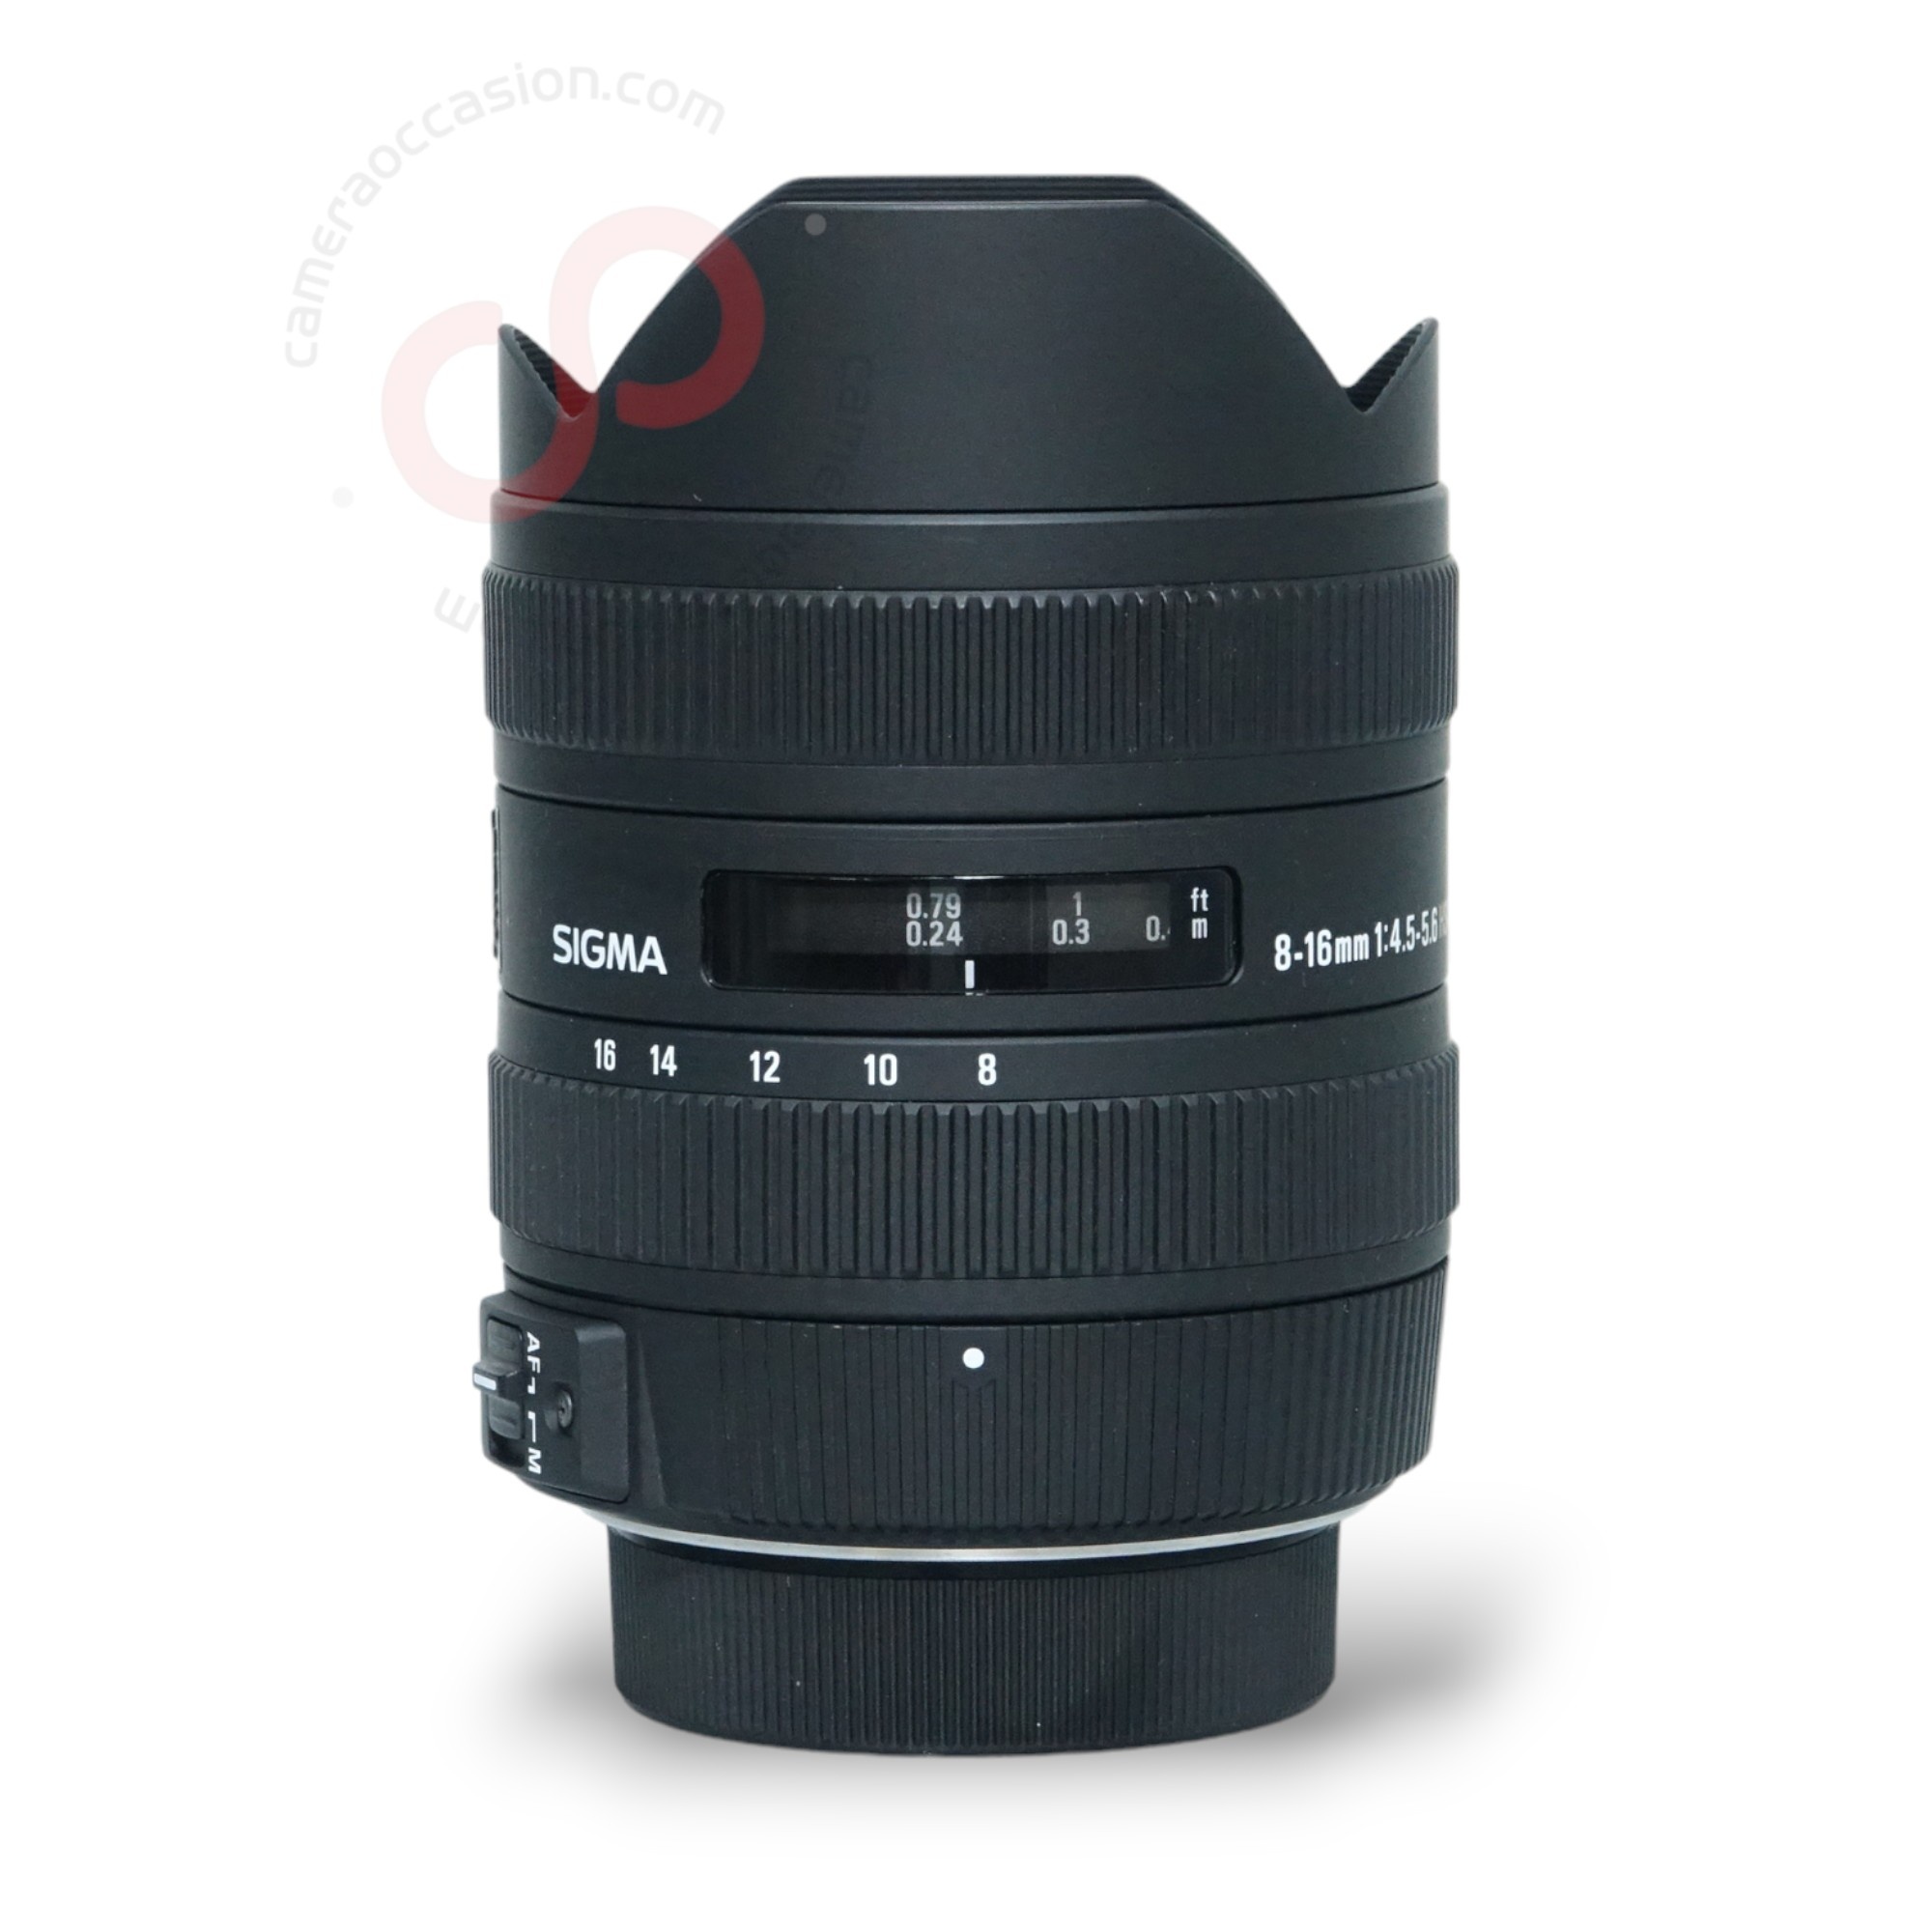 Sigma 8-16mm 4.5-5.6 DC HSM (Nikon) - CameraOccasion